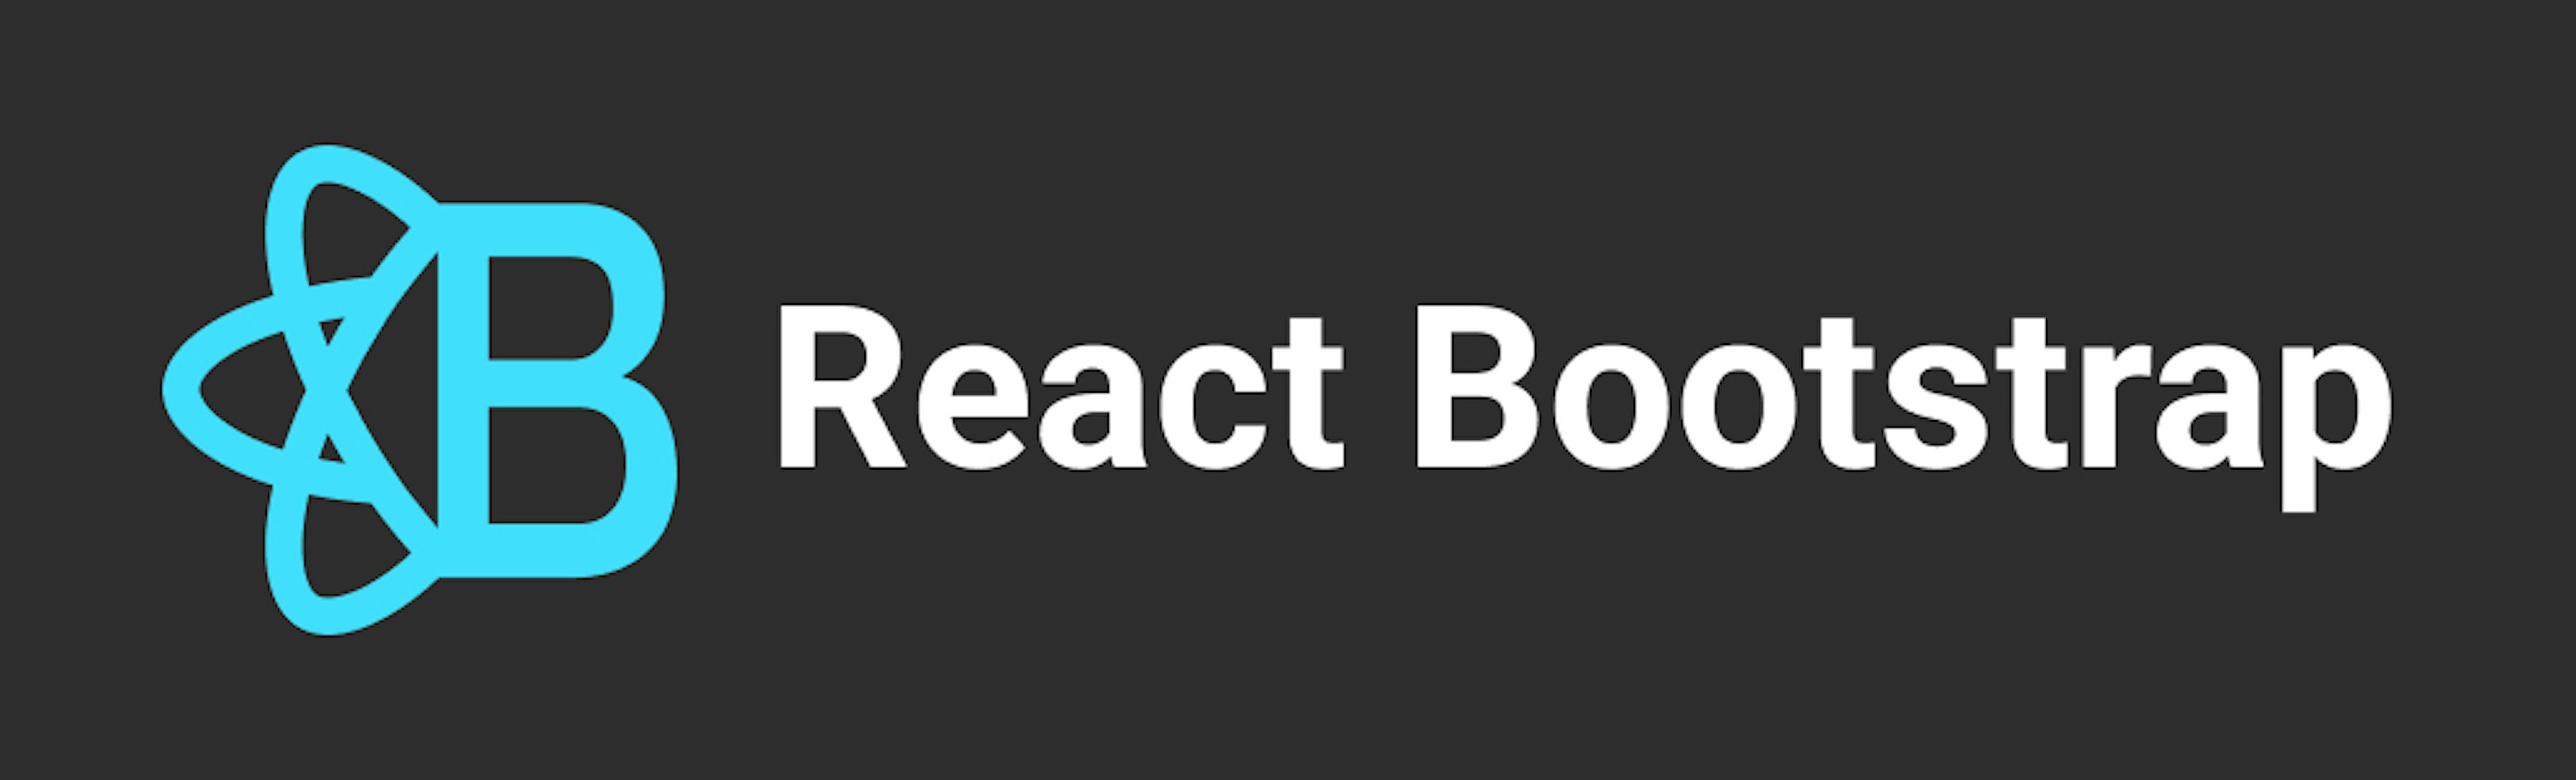 React Bootstrap